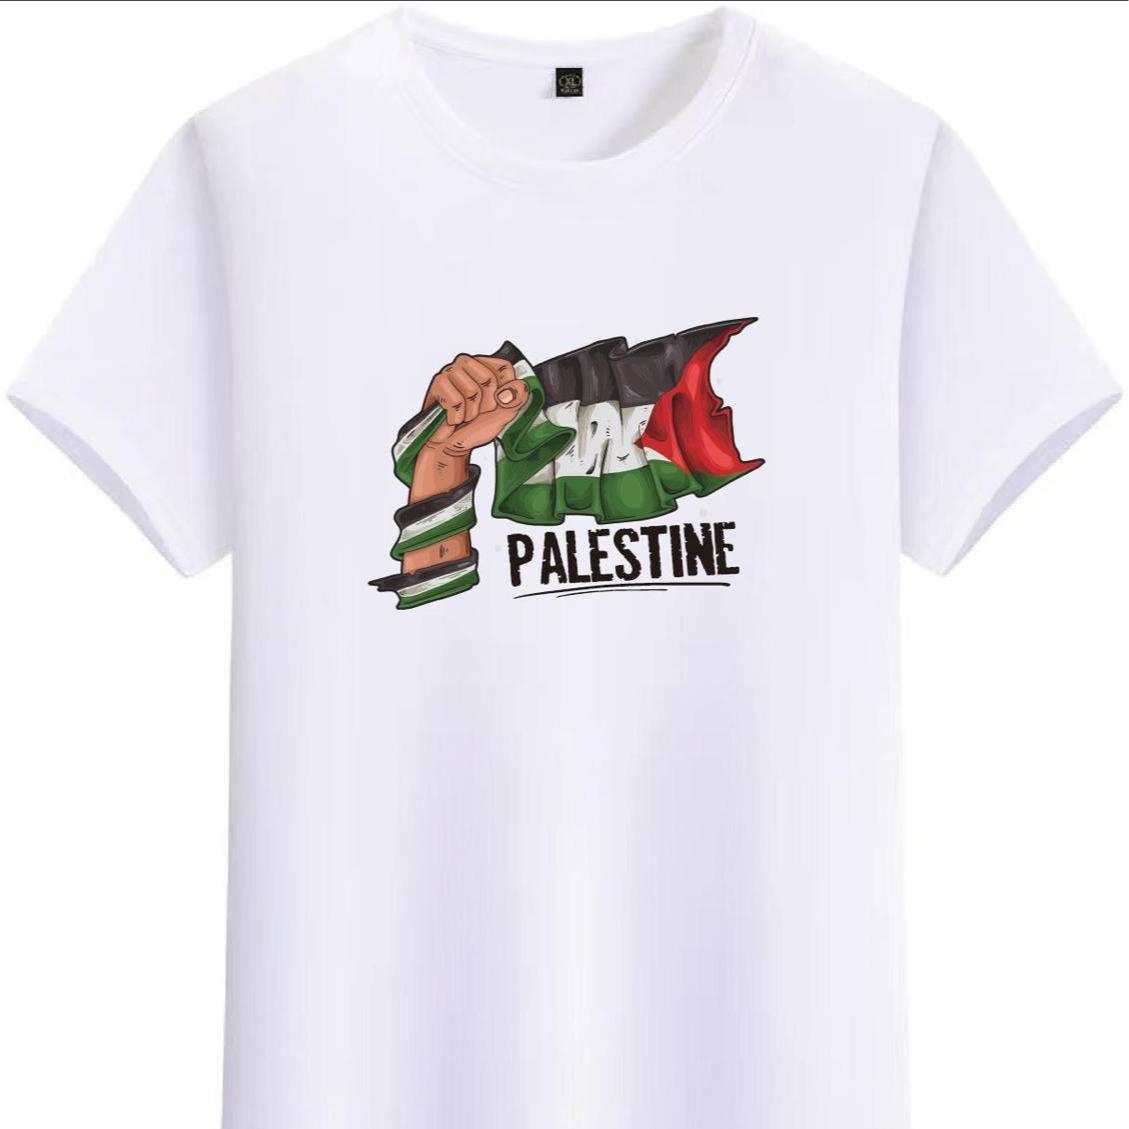 High-Quality Handheld Palestine Flag Shirt: 100% Cotton with Vibrant Print